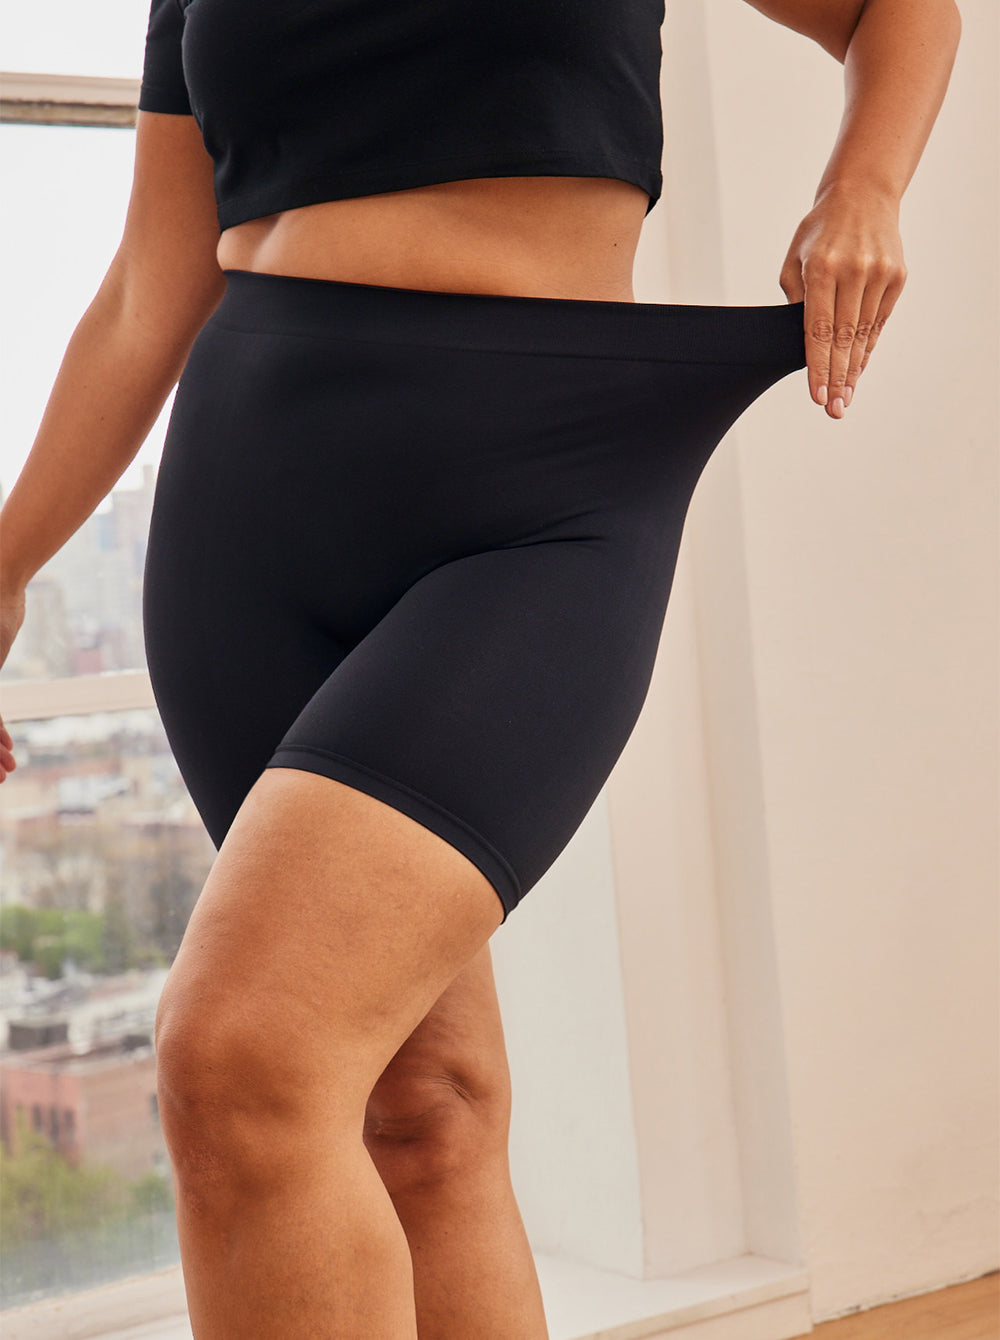 Buy VinconieShort Leggings for Women Anti Chafing Shorts Under